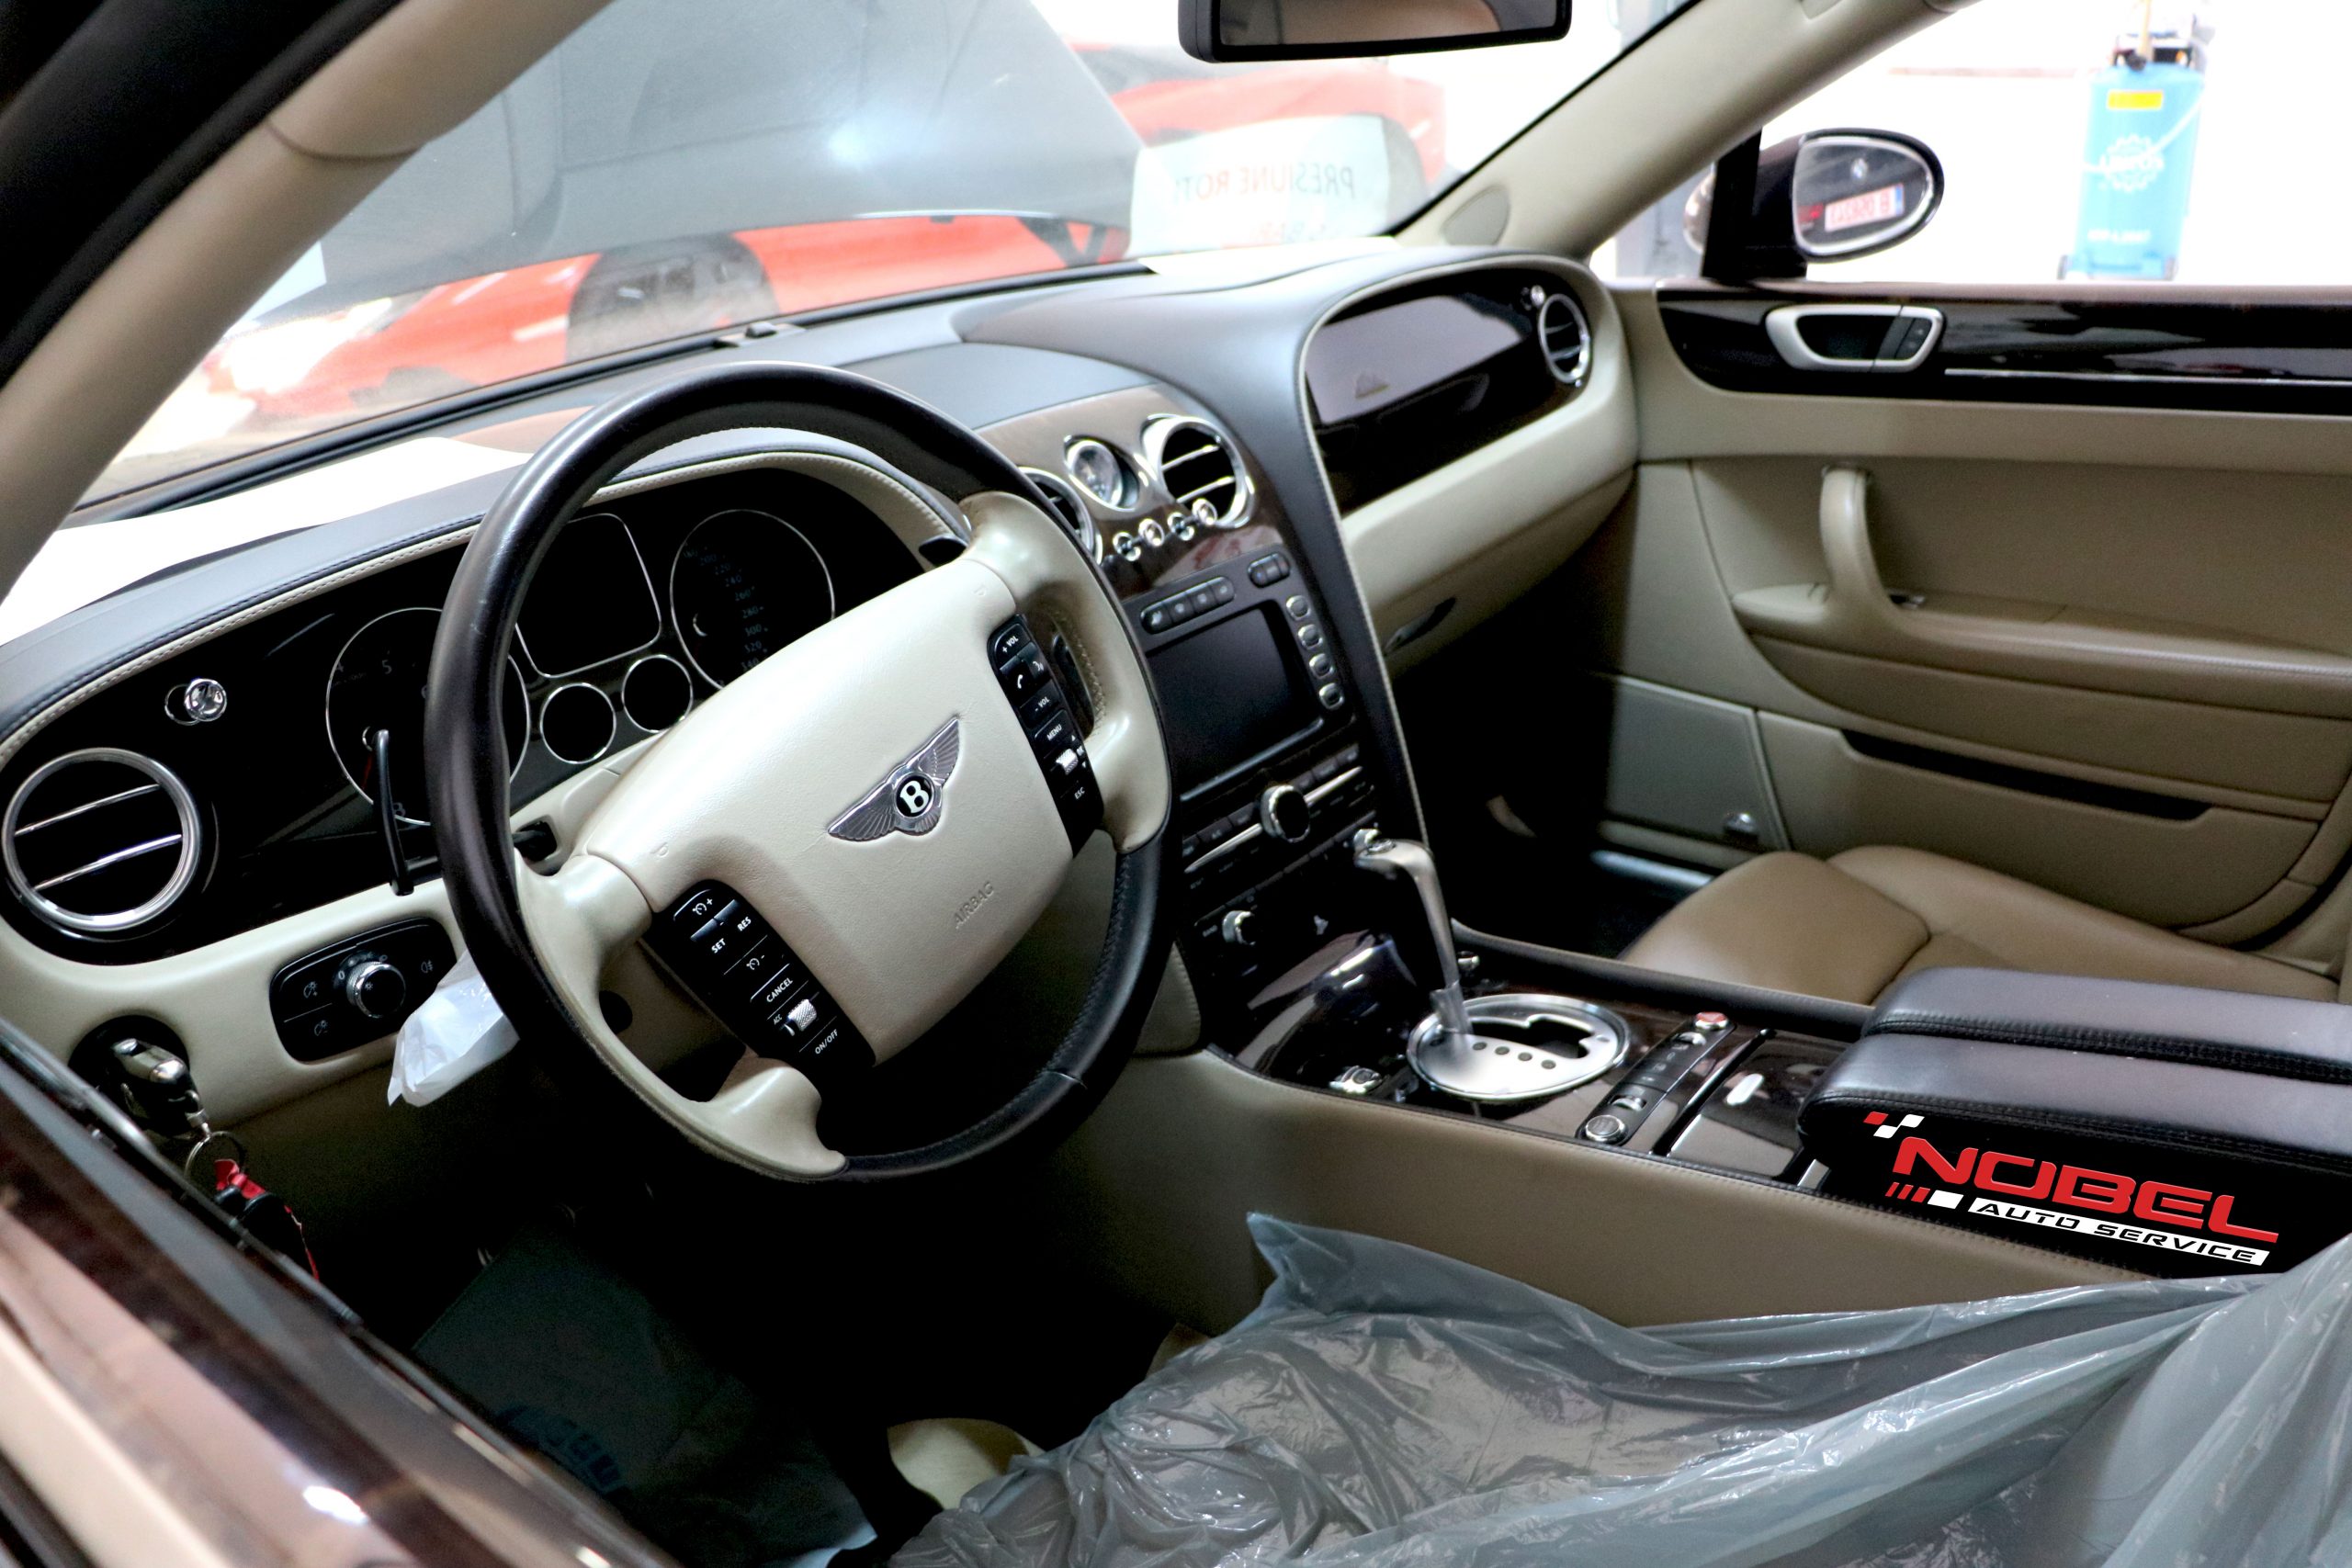 Bentley Nobel Auto Service electrica electronica mecanica